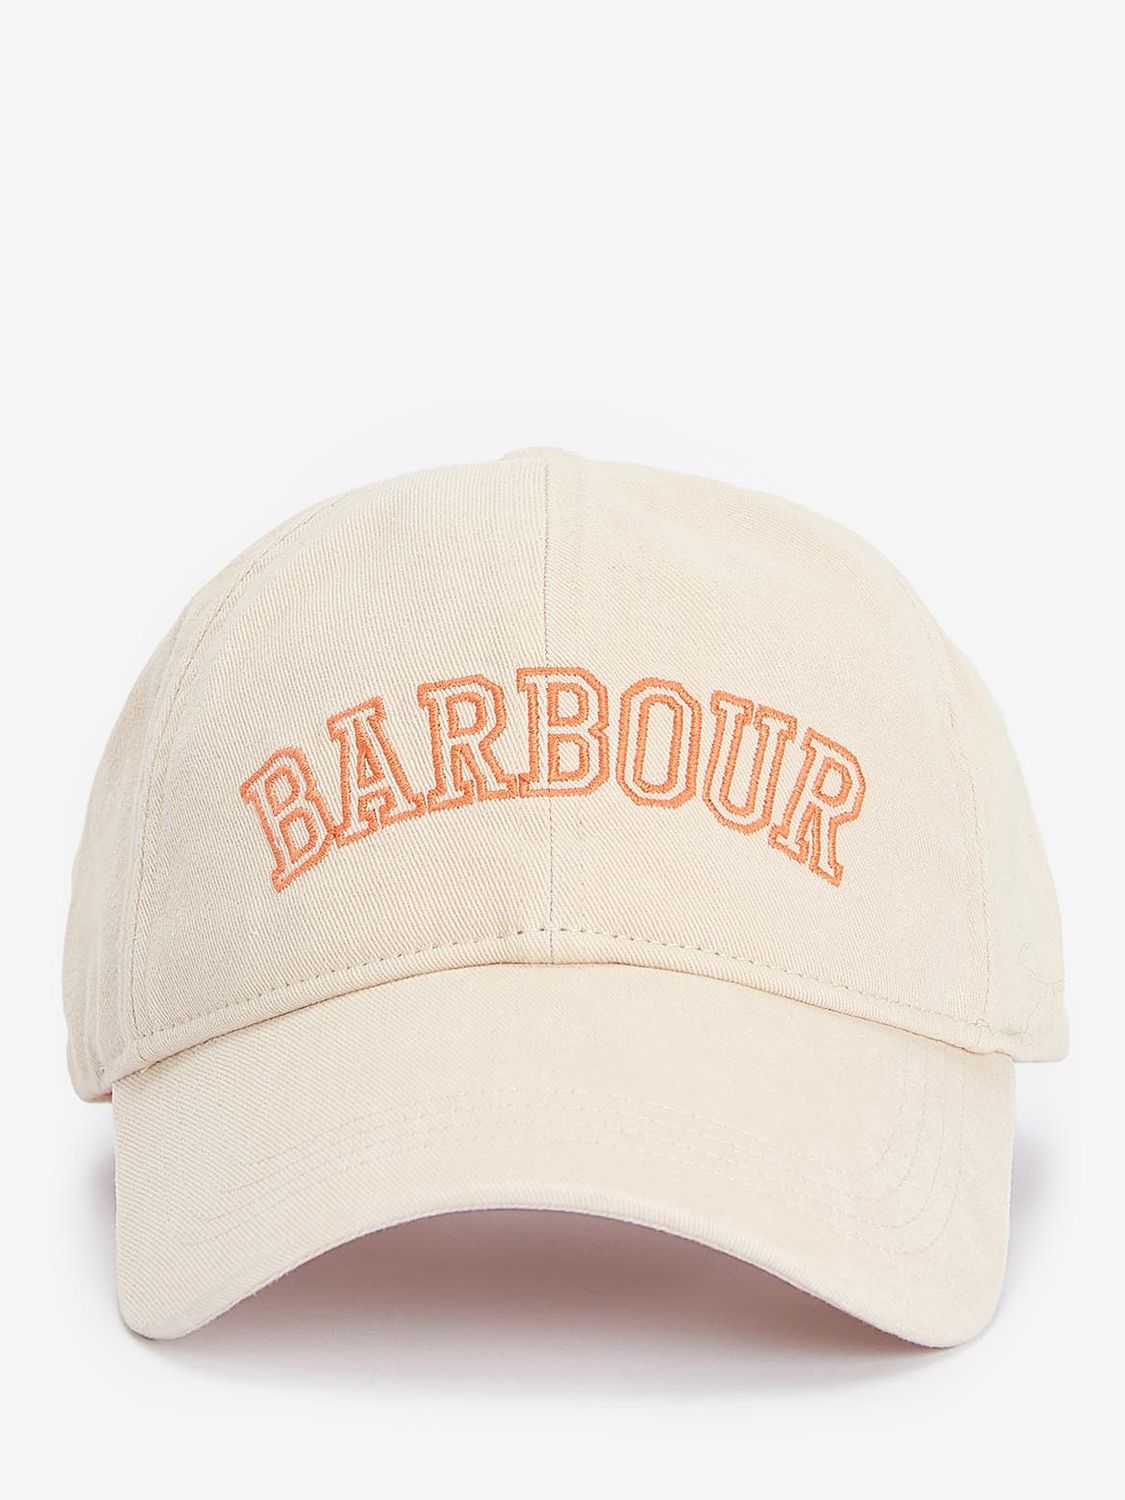 Buy Barbour Emily Sports Cap, White/Orange Online at johnlewis.com